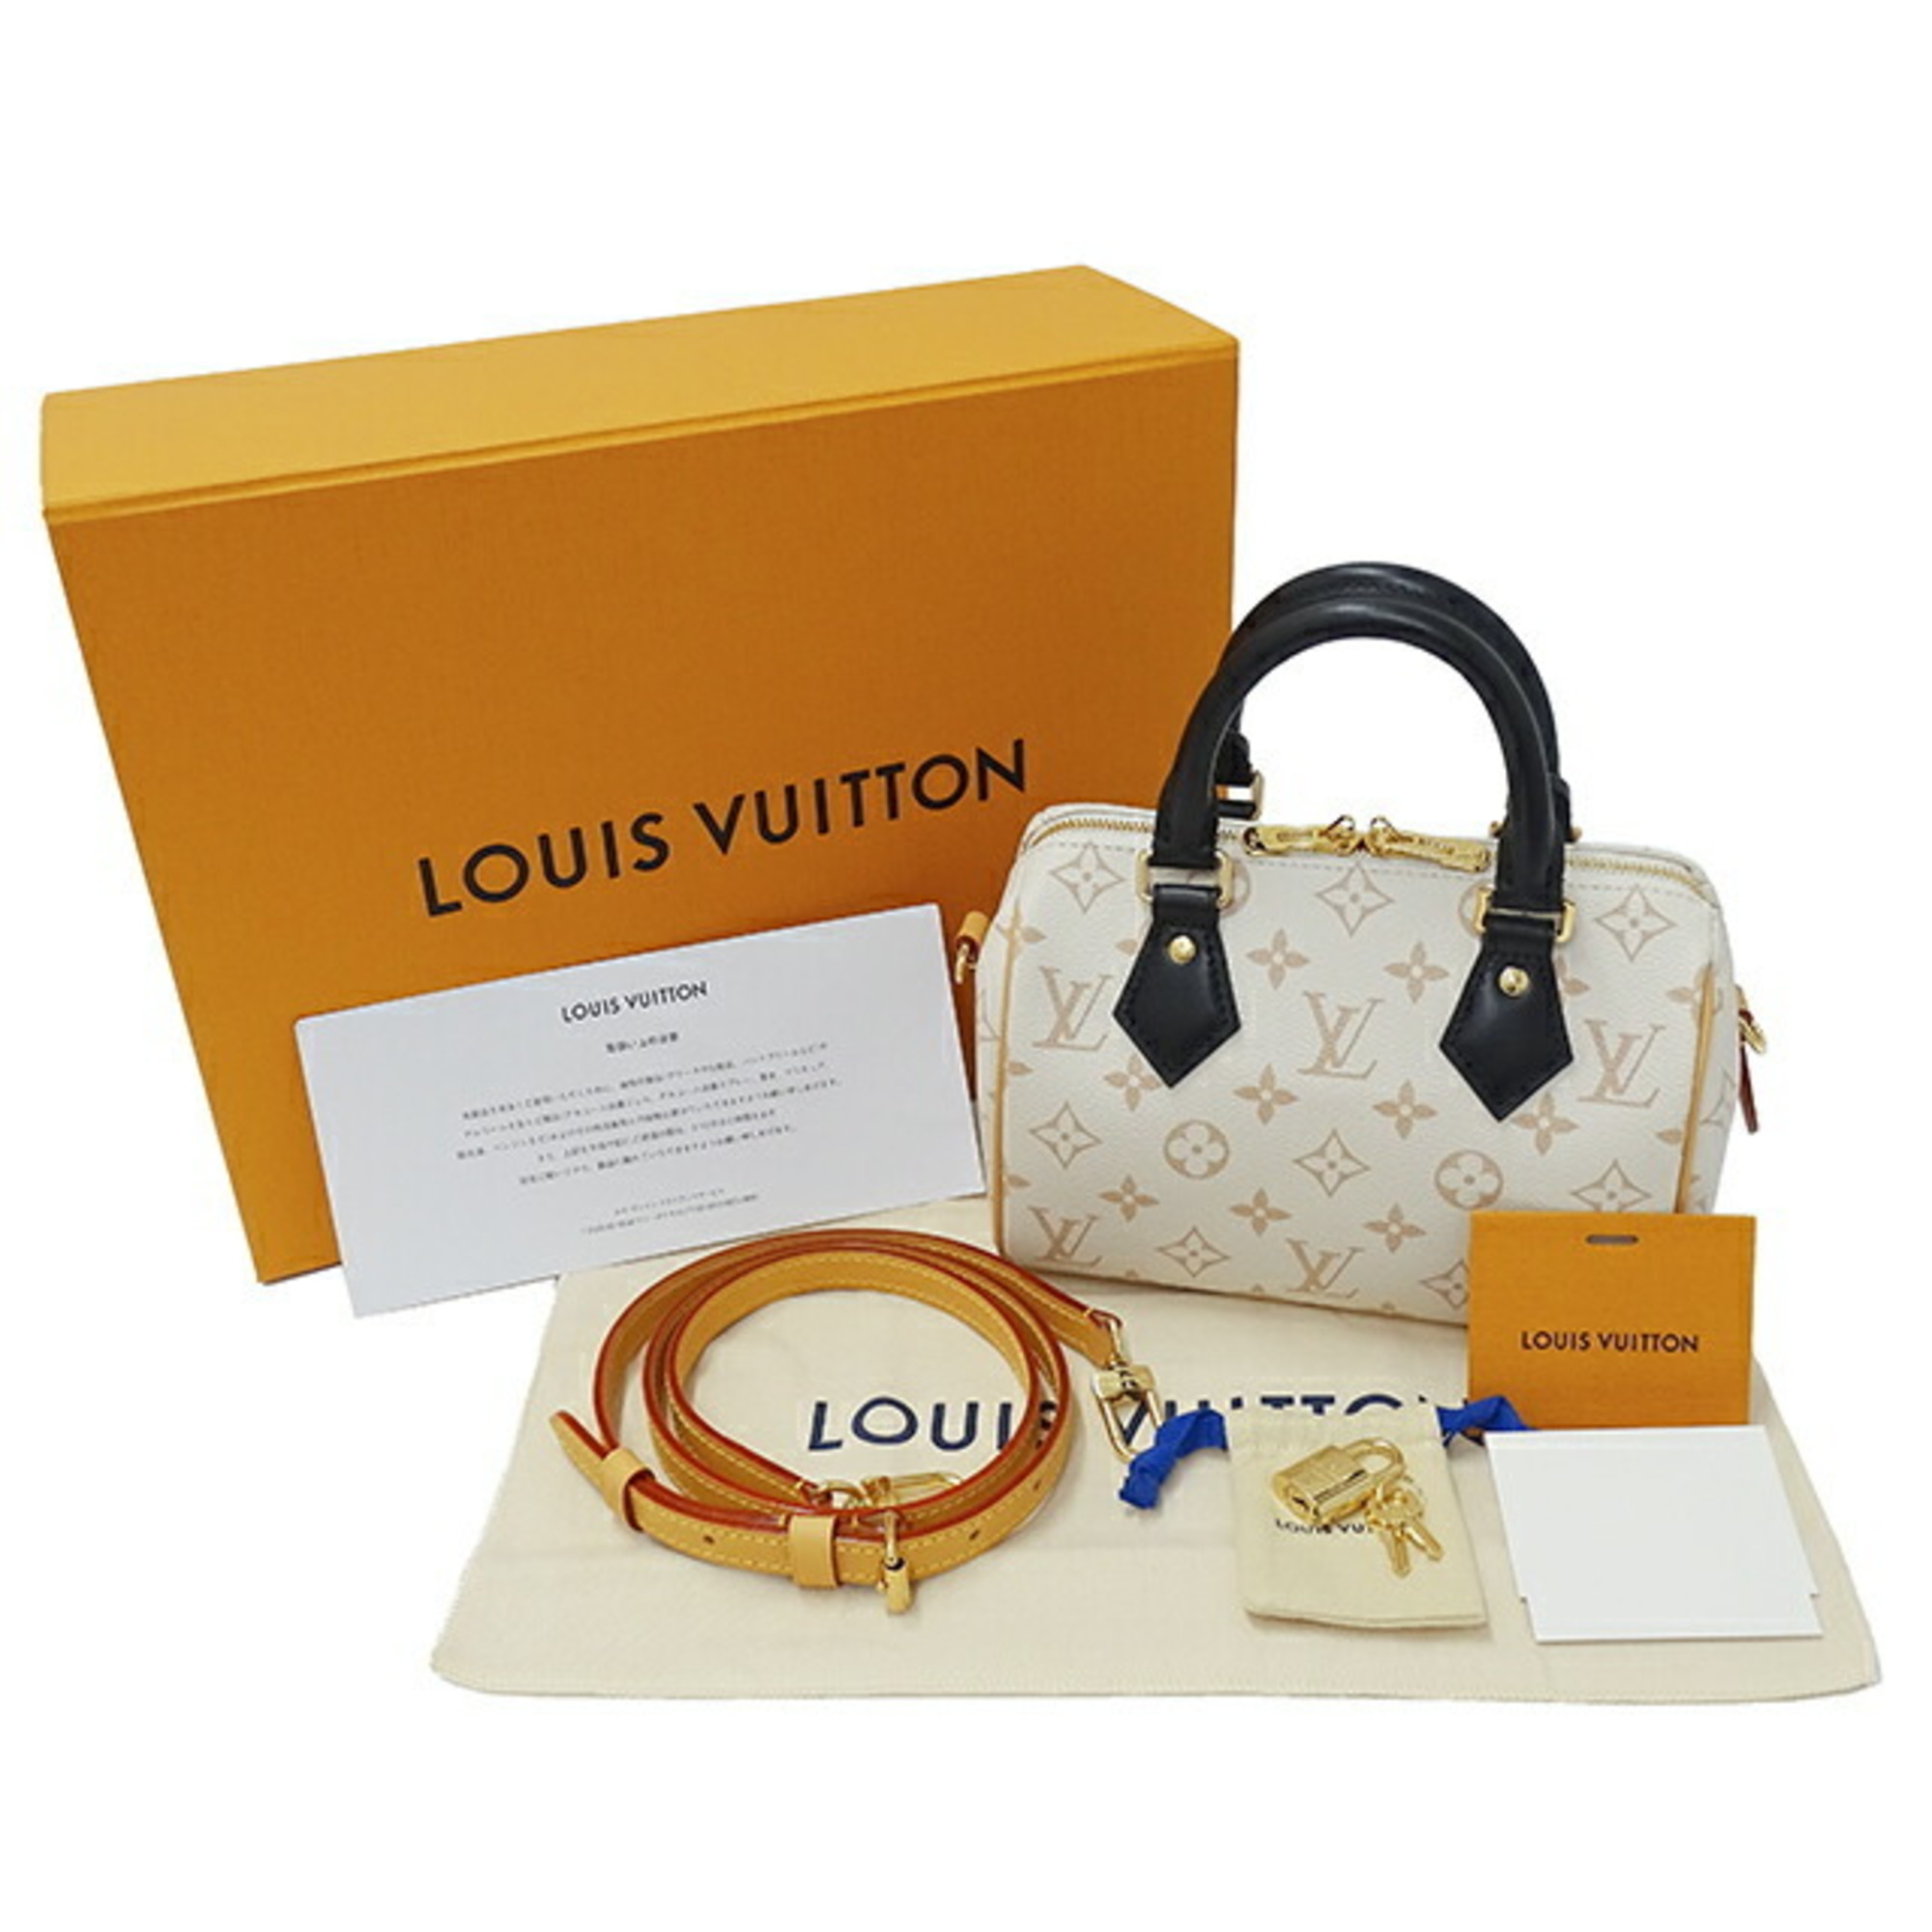 Louis Vuitton LOUIS VUITTON Bag Monogram Dune Women's Handbag Shoulder 2way Speedy Bandouliere 20 White Beige M46906 Compact